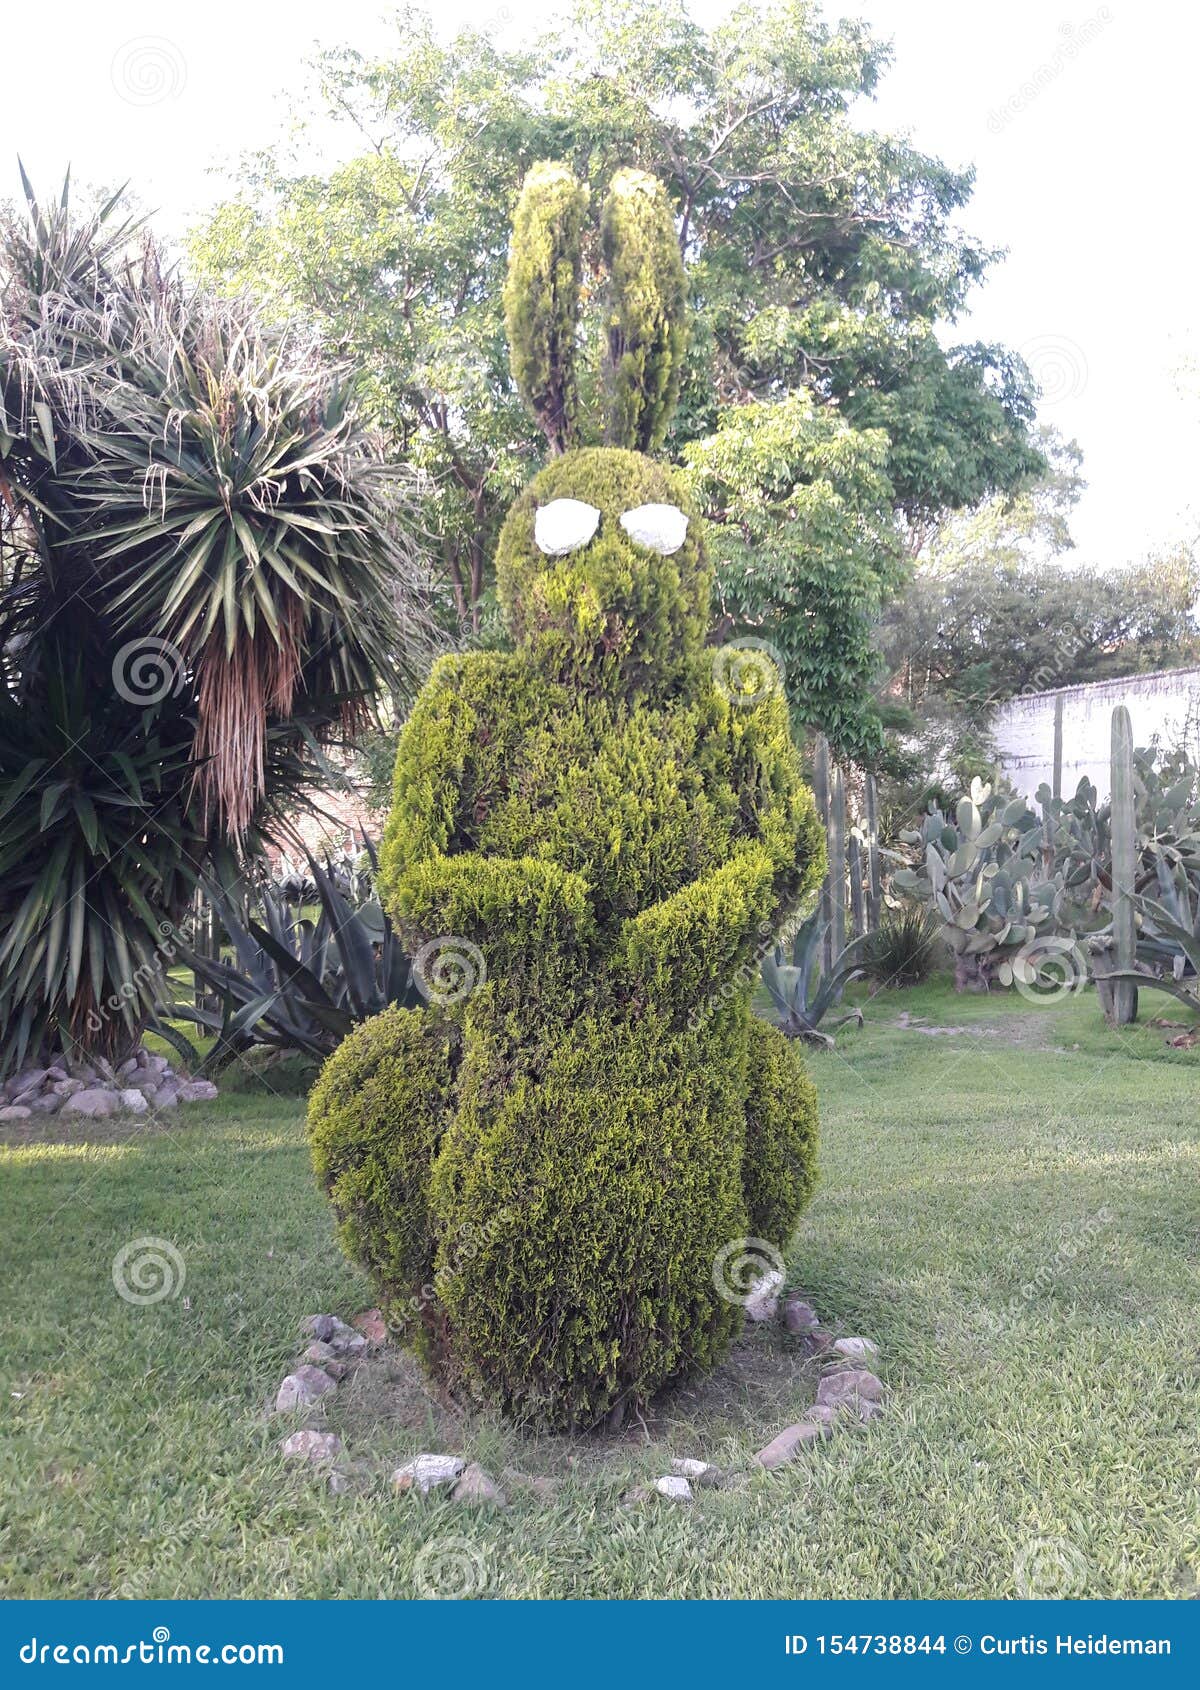 Bush Sculpted Into A Rabbit With Sunglasses In San Miguel De